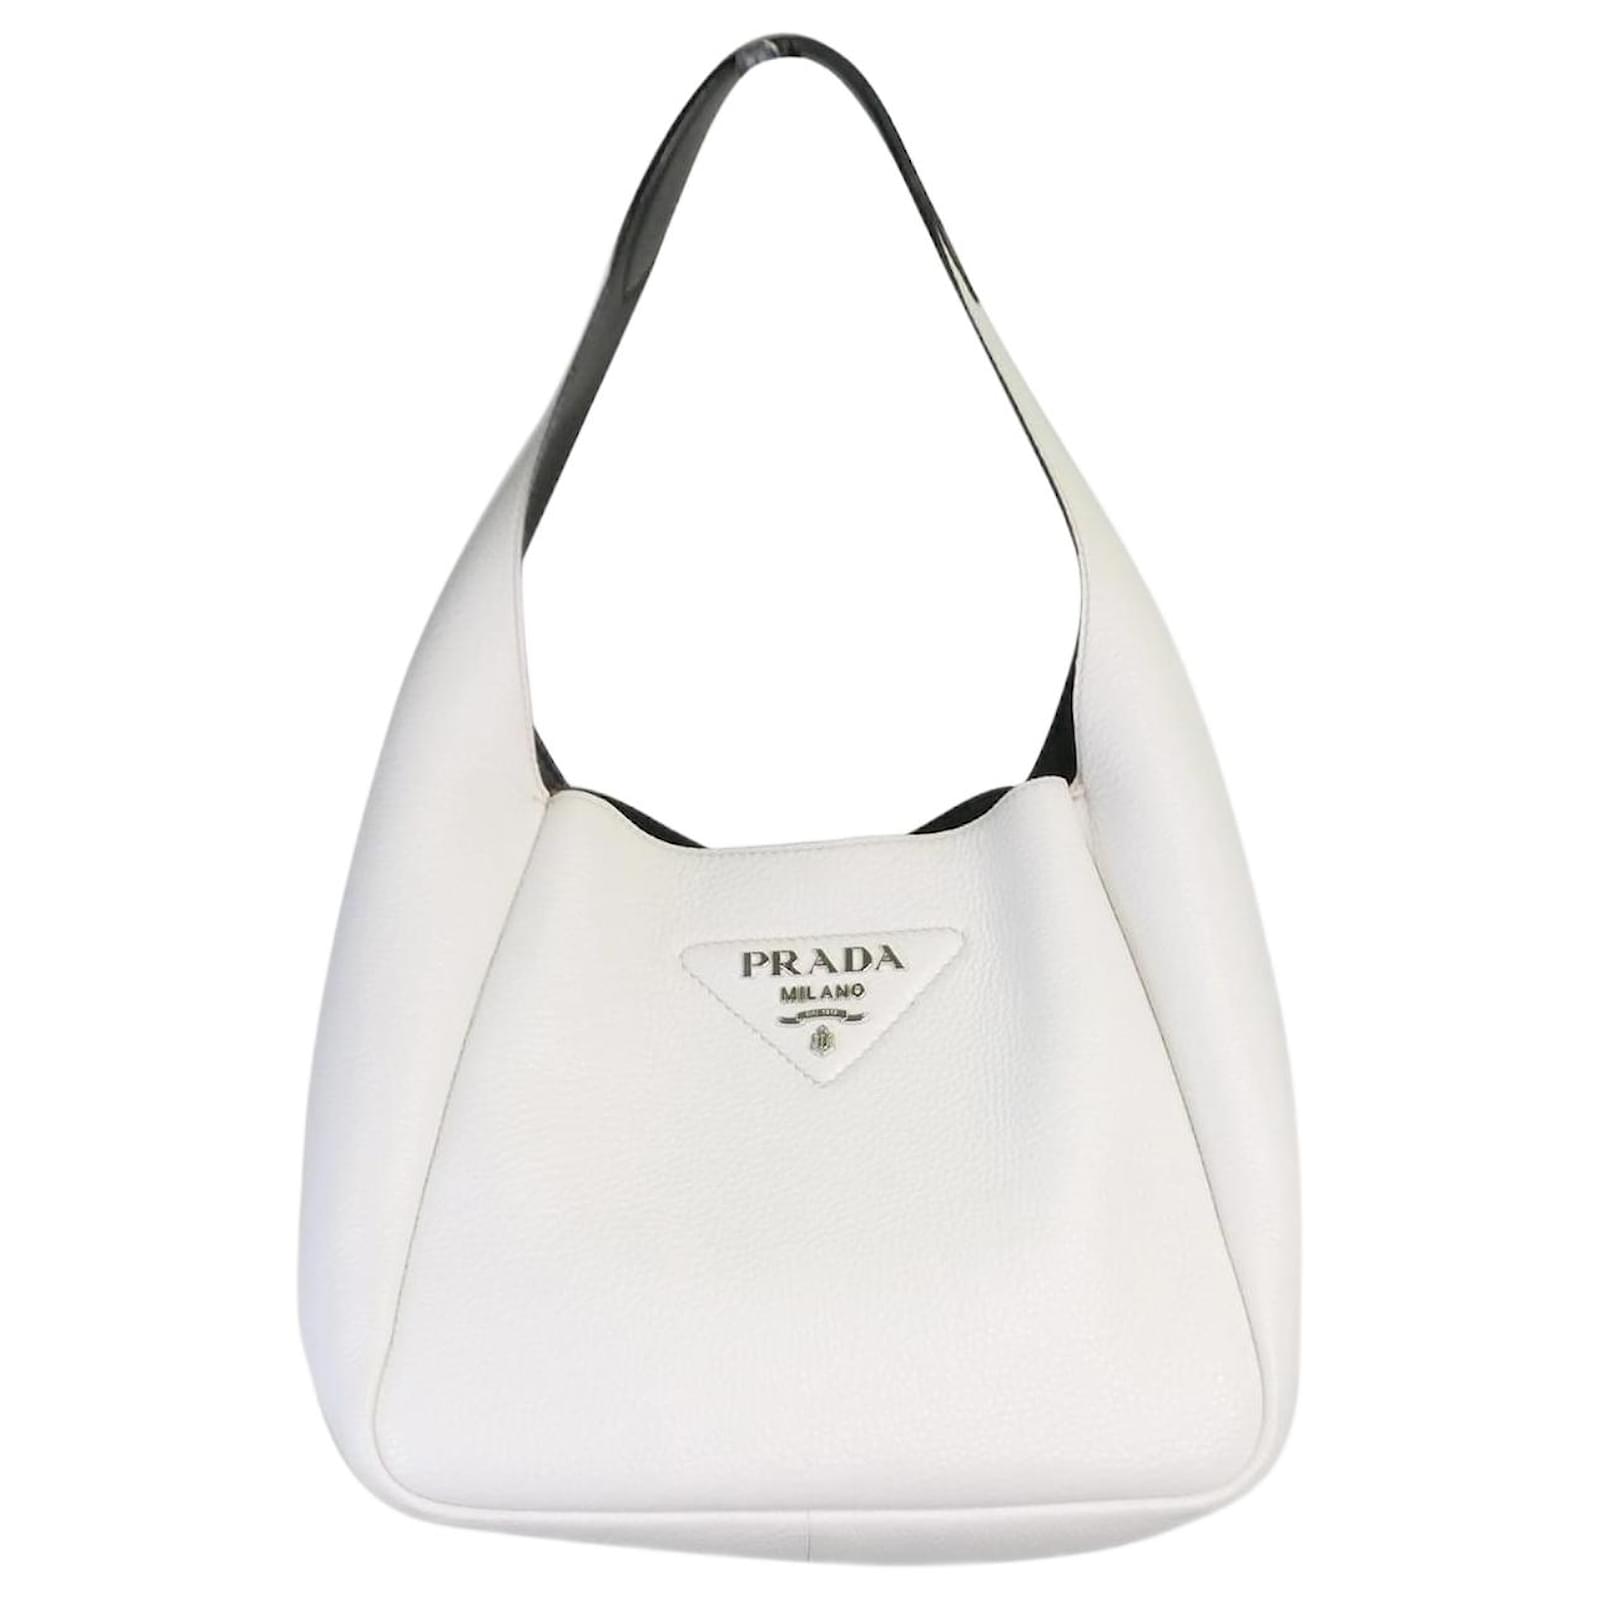 Women's Galleria Double-Zip Leather Tote Handbag by Prada - Sam's Club